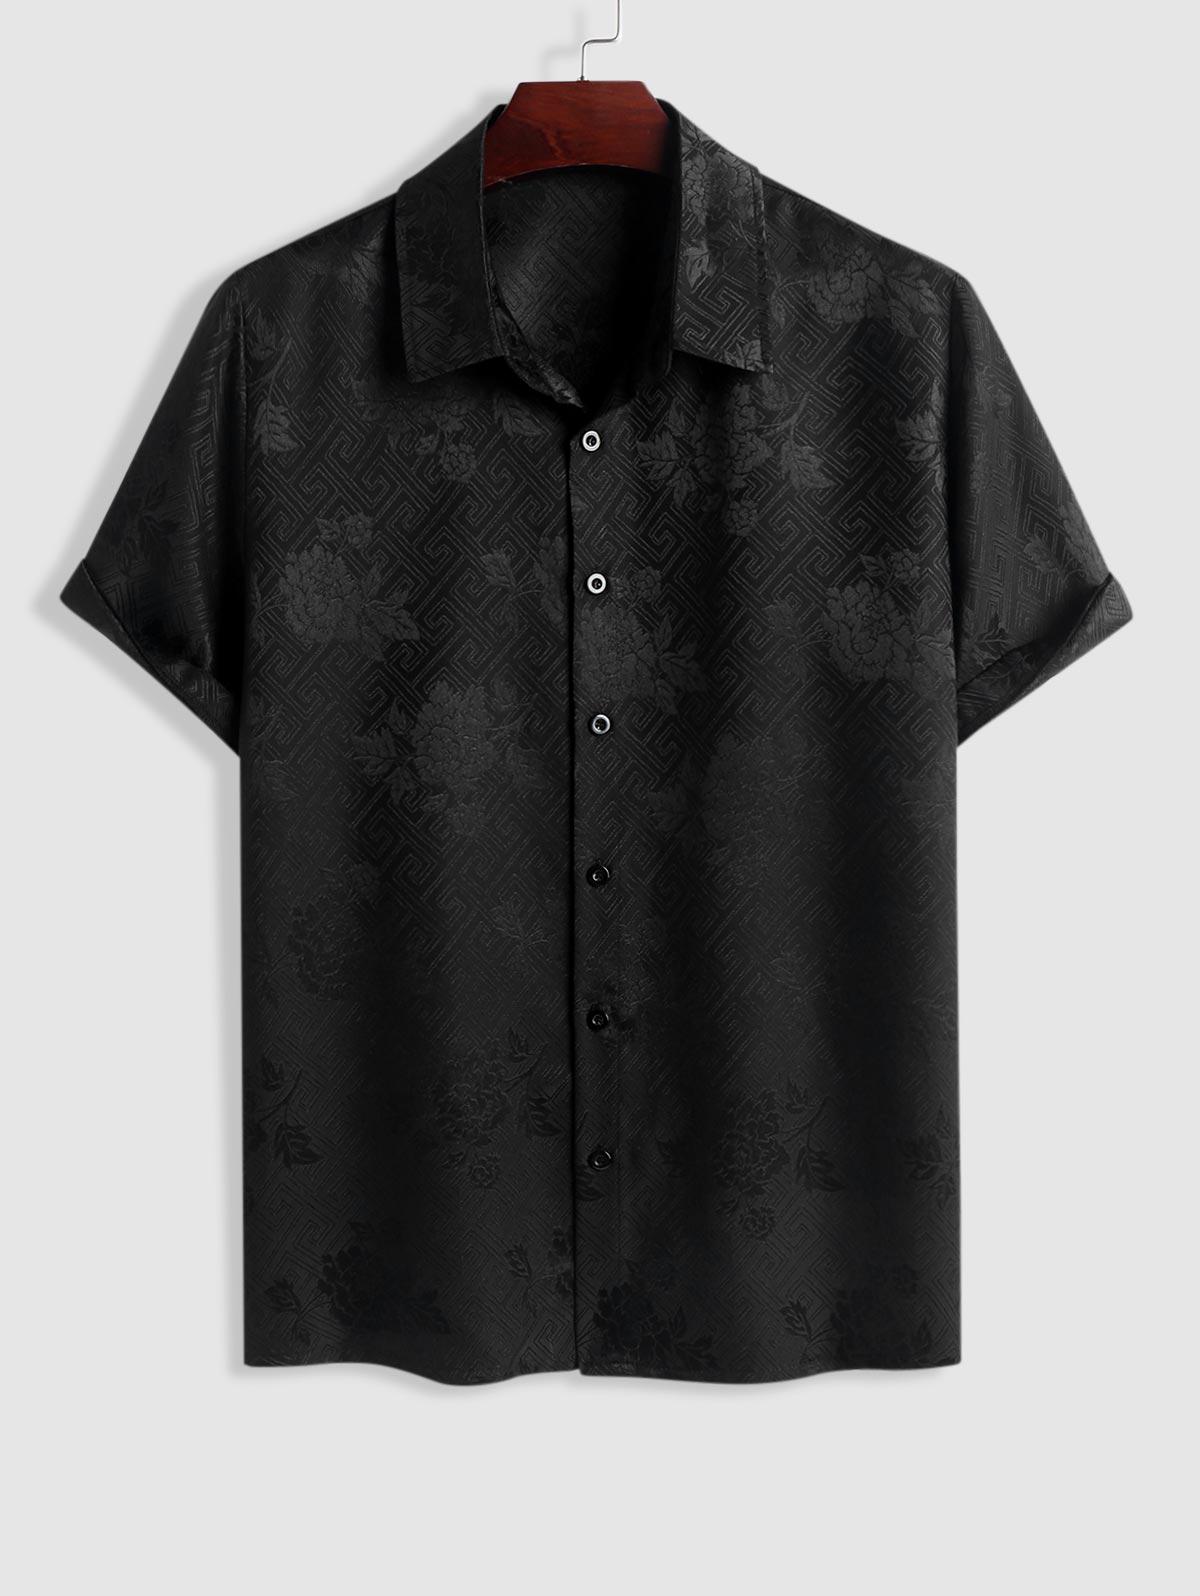 ZAFUL Men's ZAFUL Jacquard Rose Pattern Satin Textured Short Sleeves Shirt Xl Black